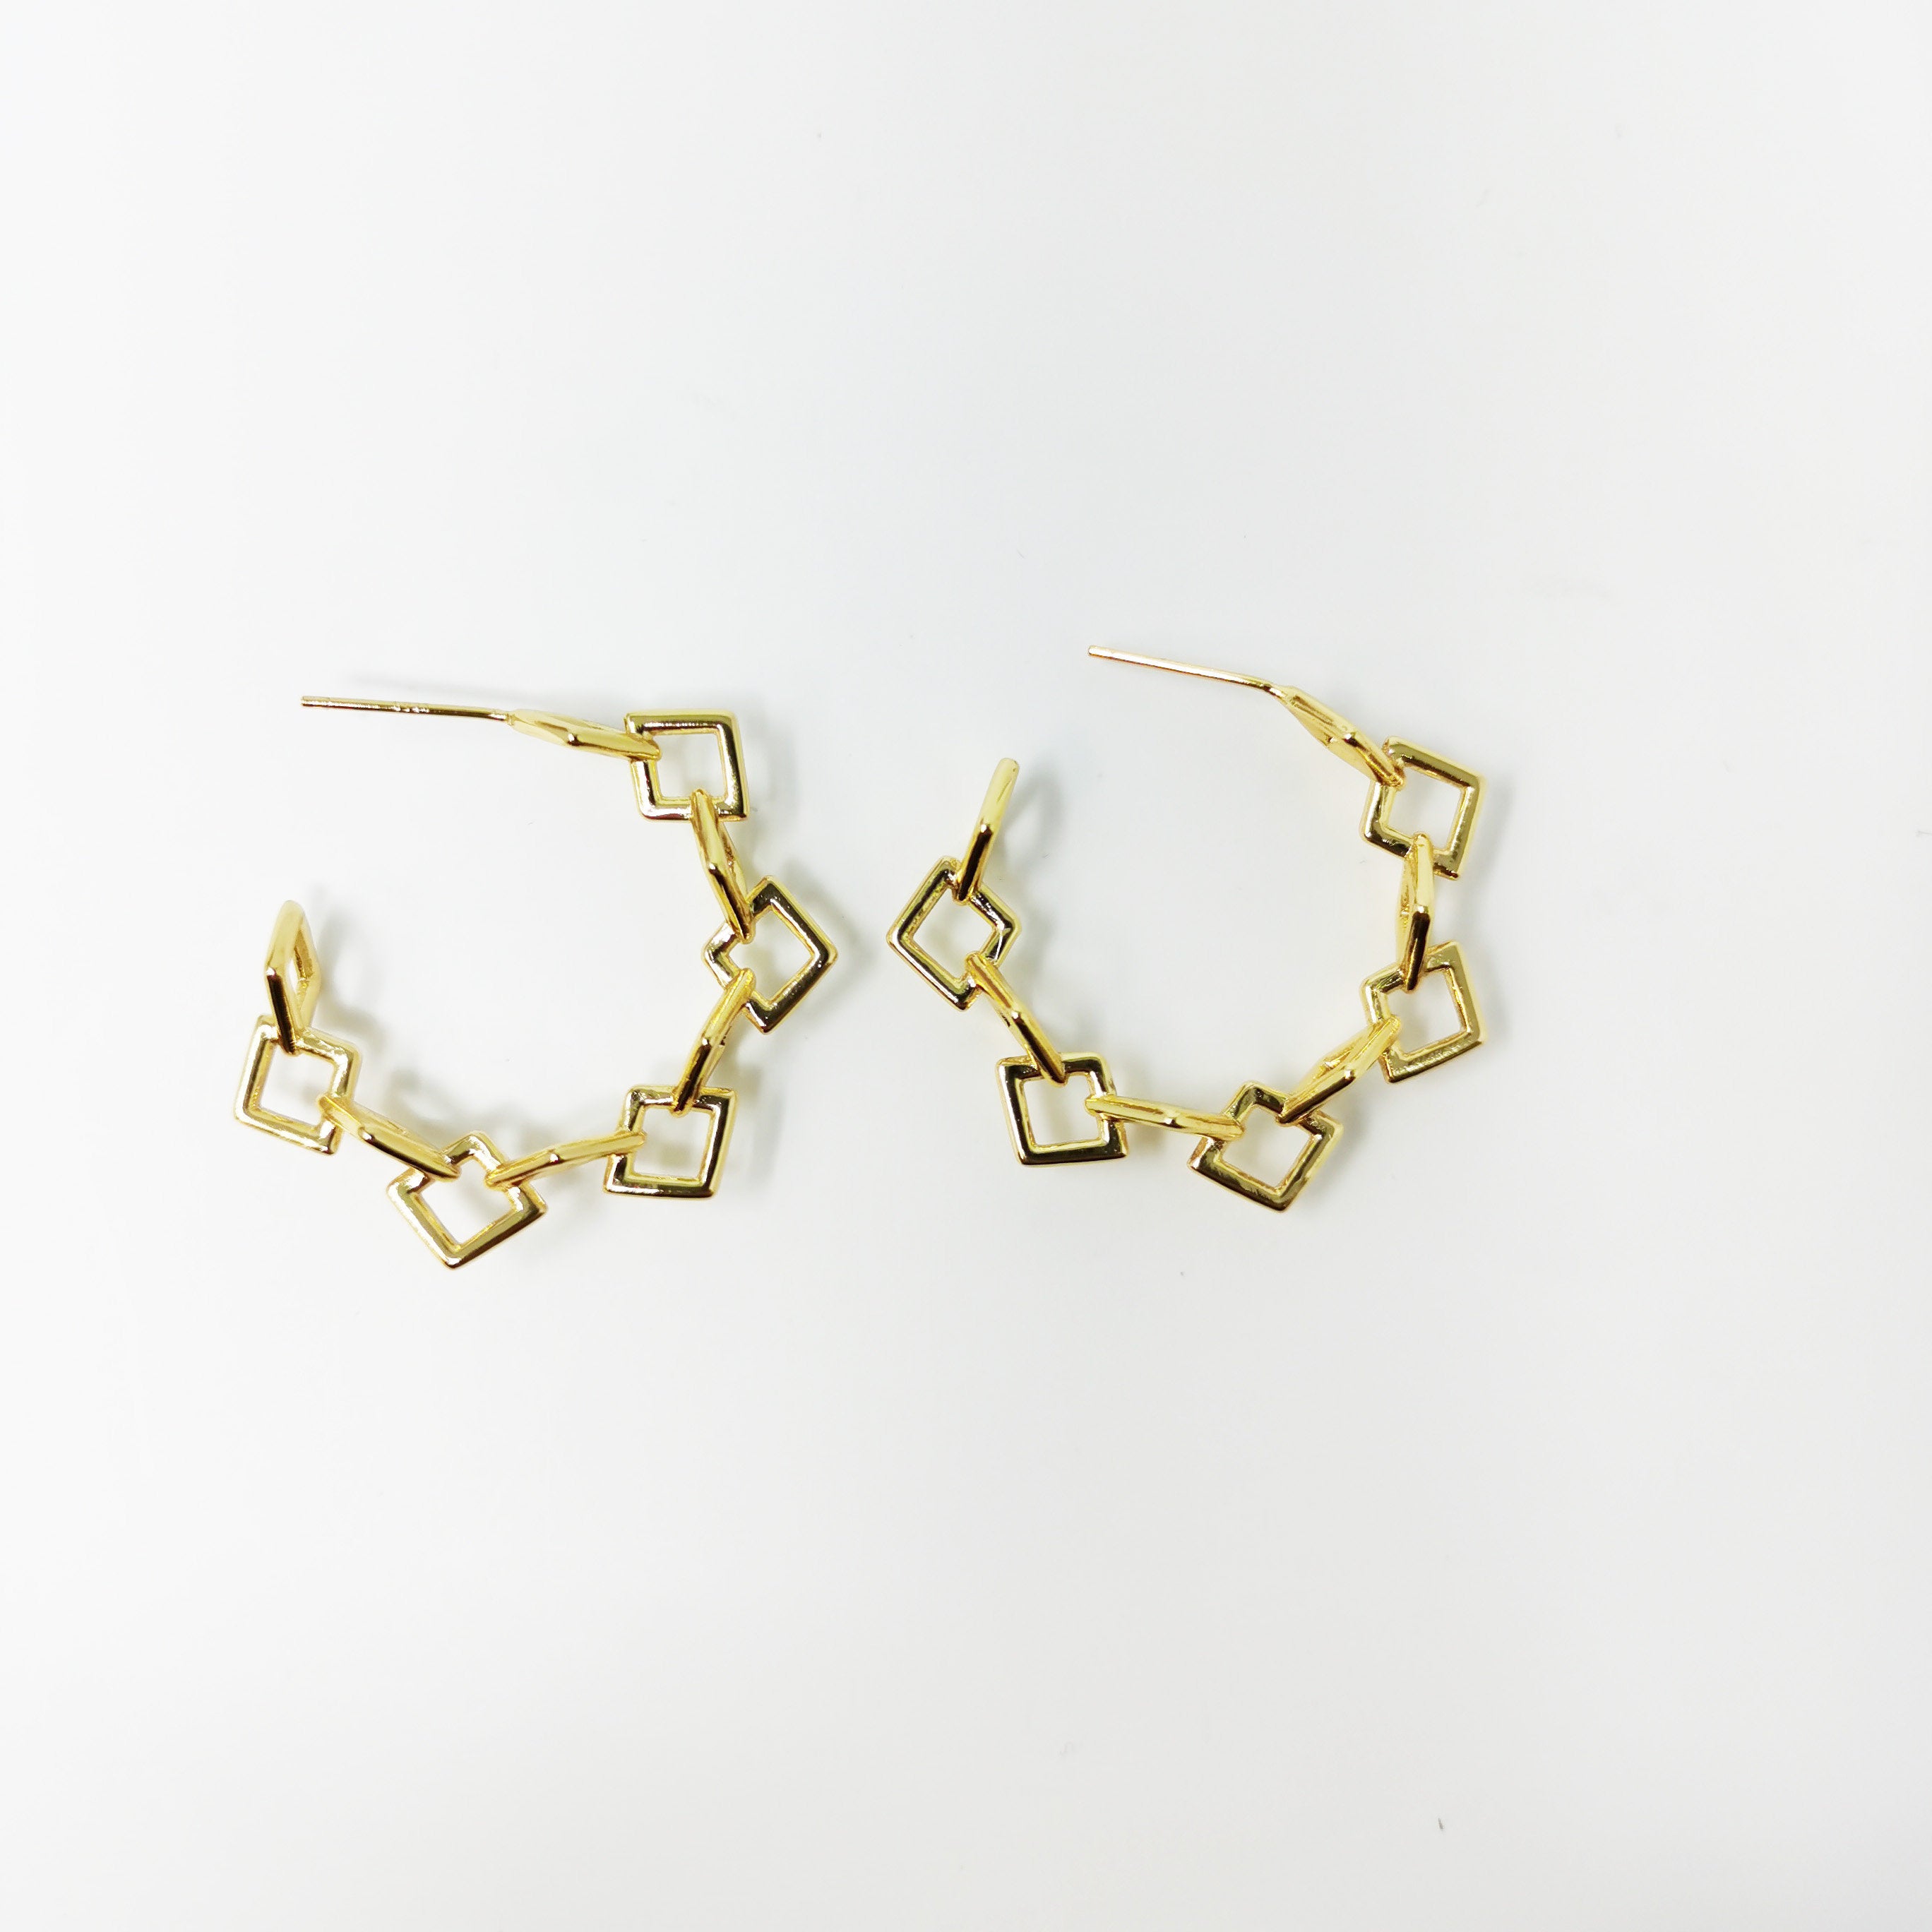 24k Vermeil Gold Earrings, Hoop Earrings, Medium Hoop, Square Linked Earring, Gift for Her, Earrings for Women, Everyday Wear Earrings, 2xSUPP-741/K-741 - DLUXCA